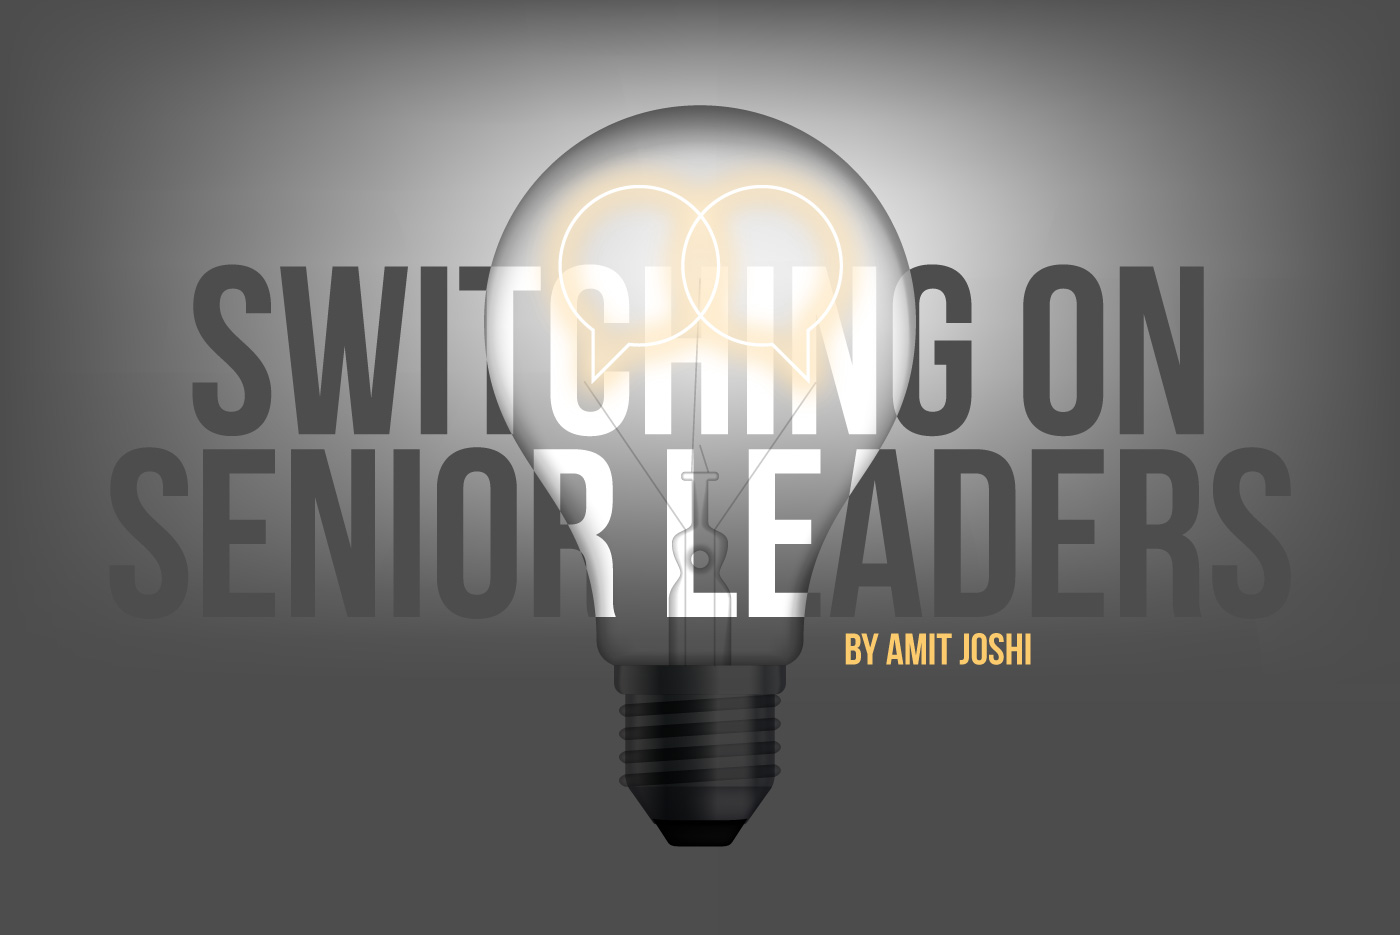 Switching on senior leaders header image